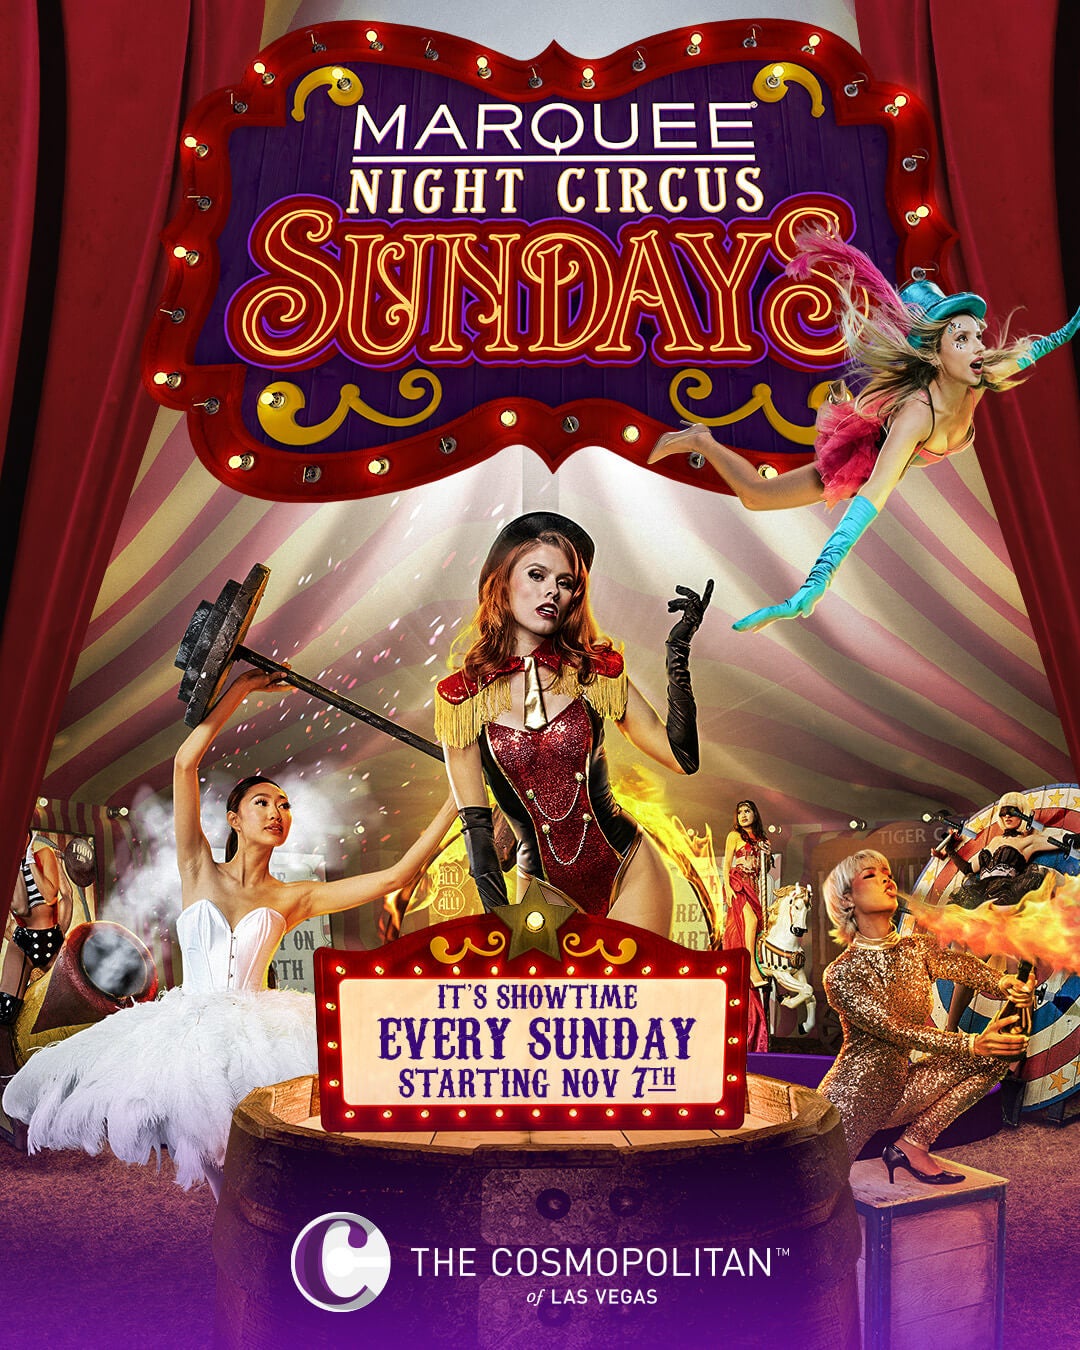 Marquee Night Circus Sundays